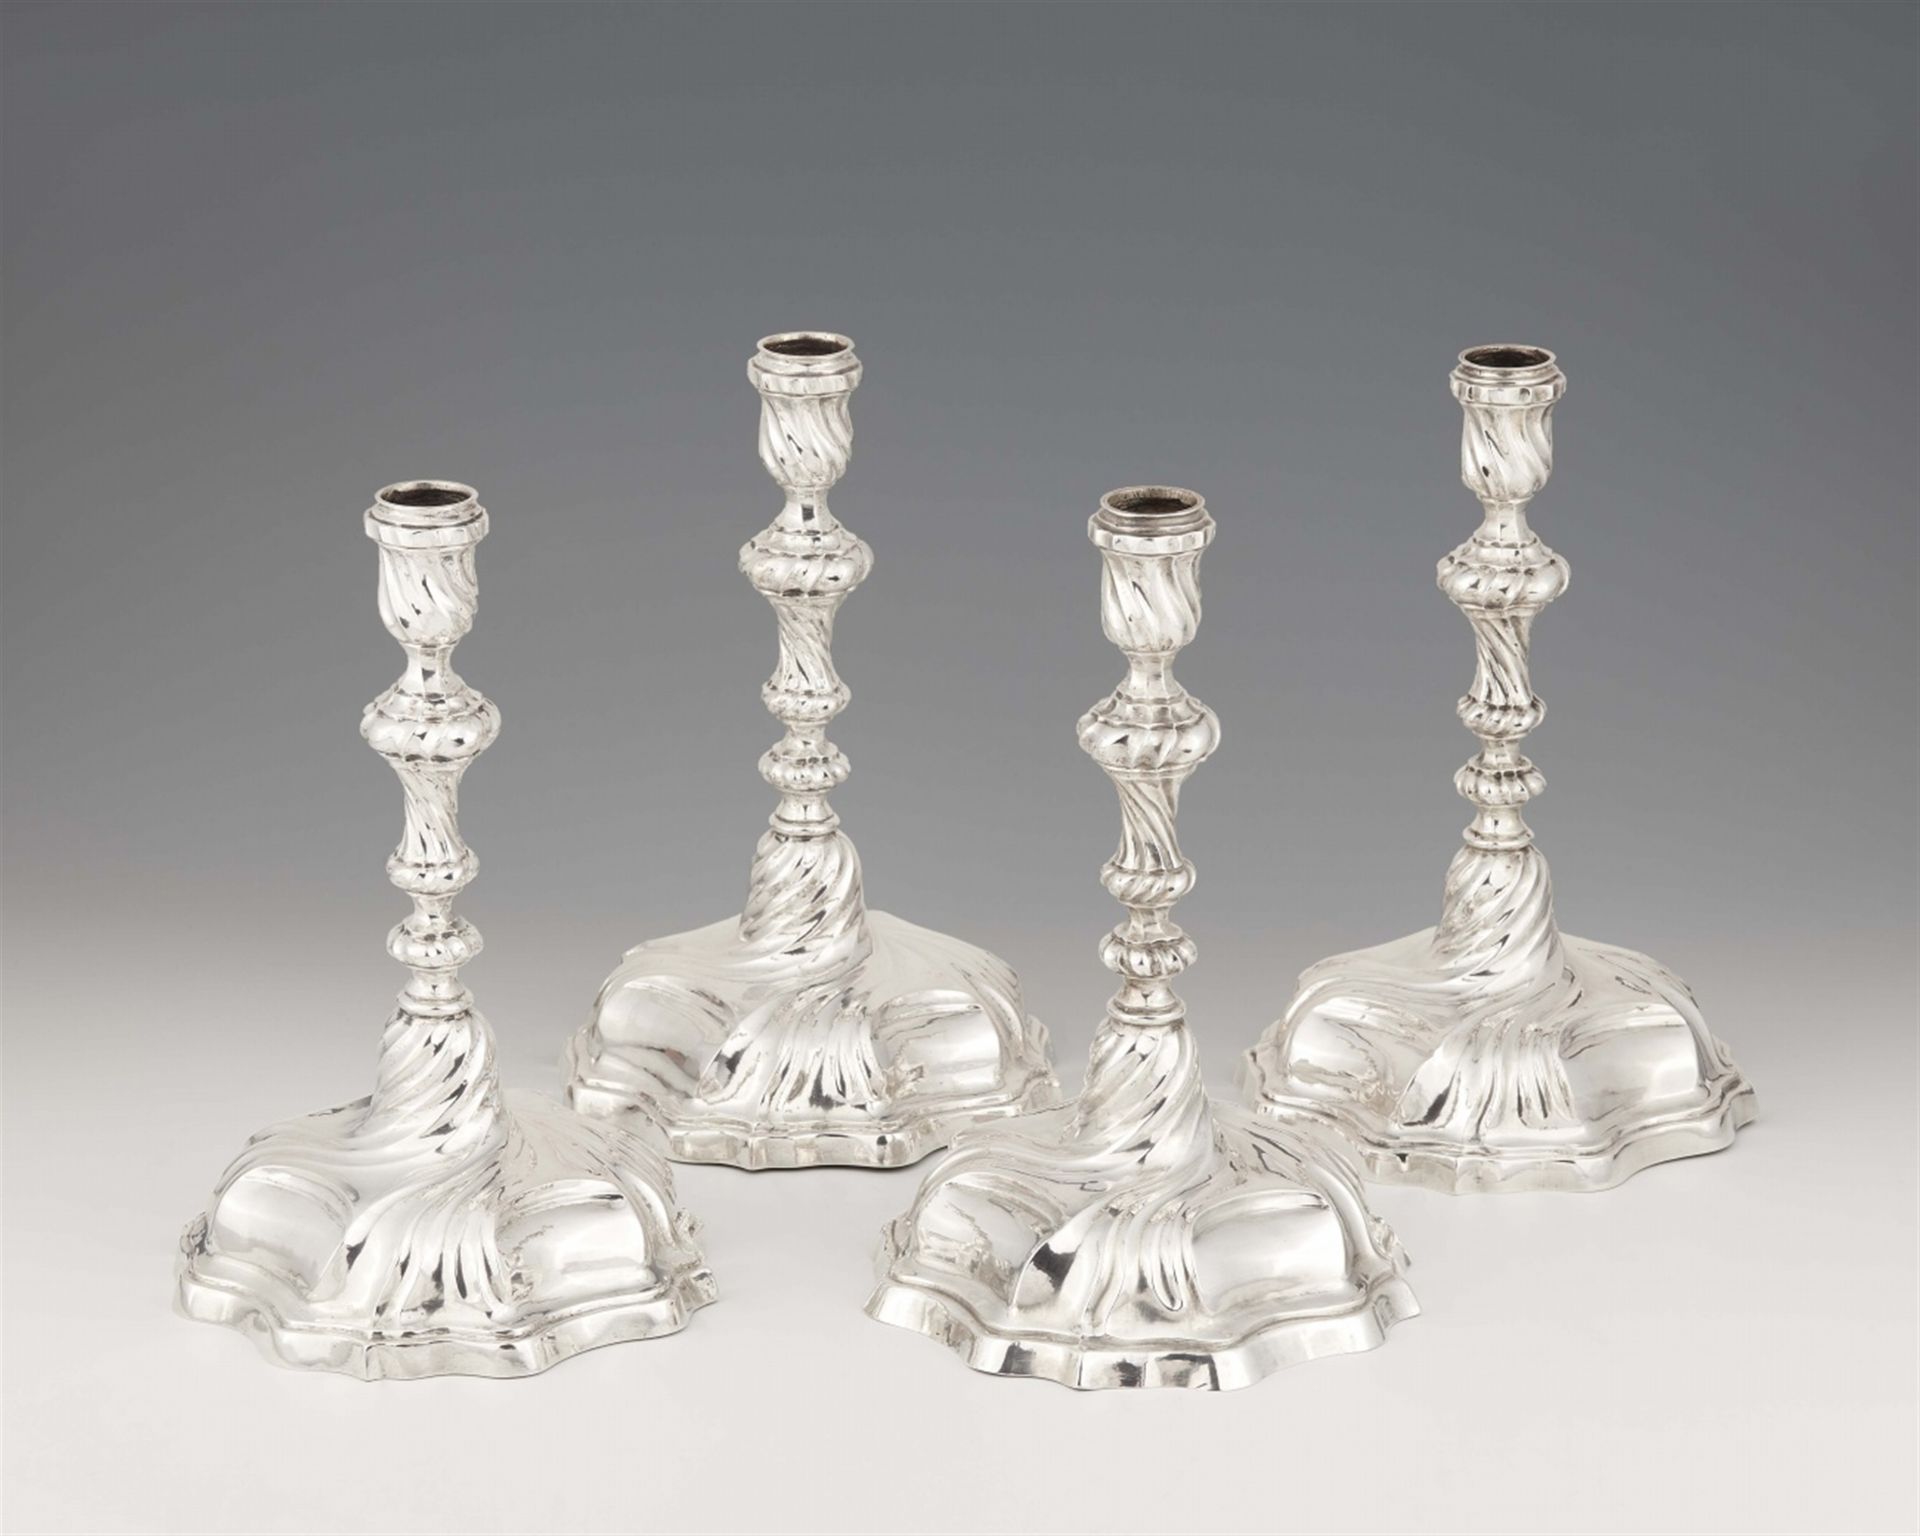 Four Augsburg silver candlesticks